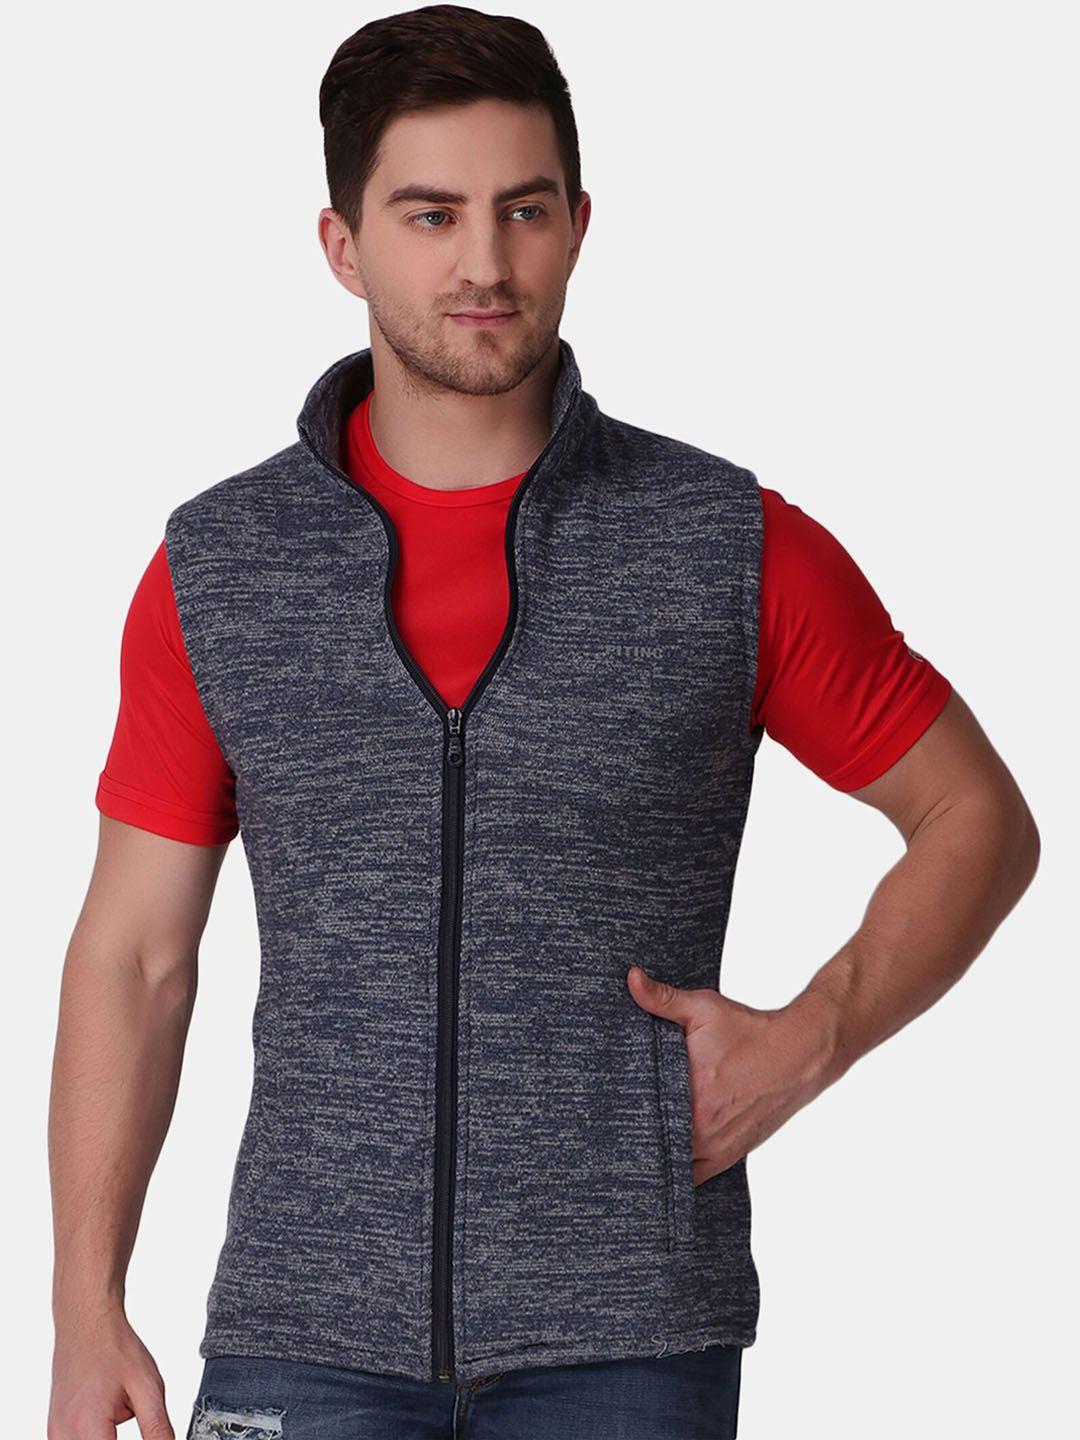 fitinc men grey striped fleece e-dry technology sporty jacket